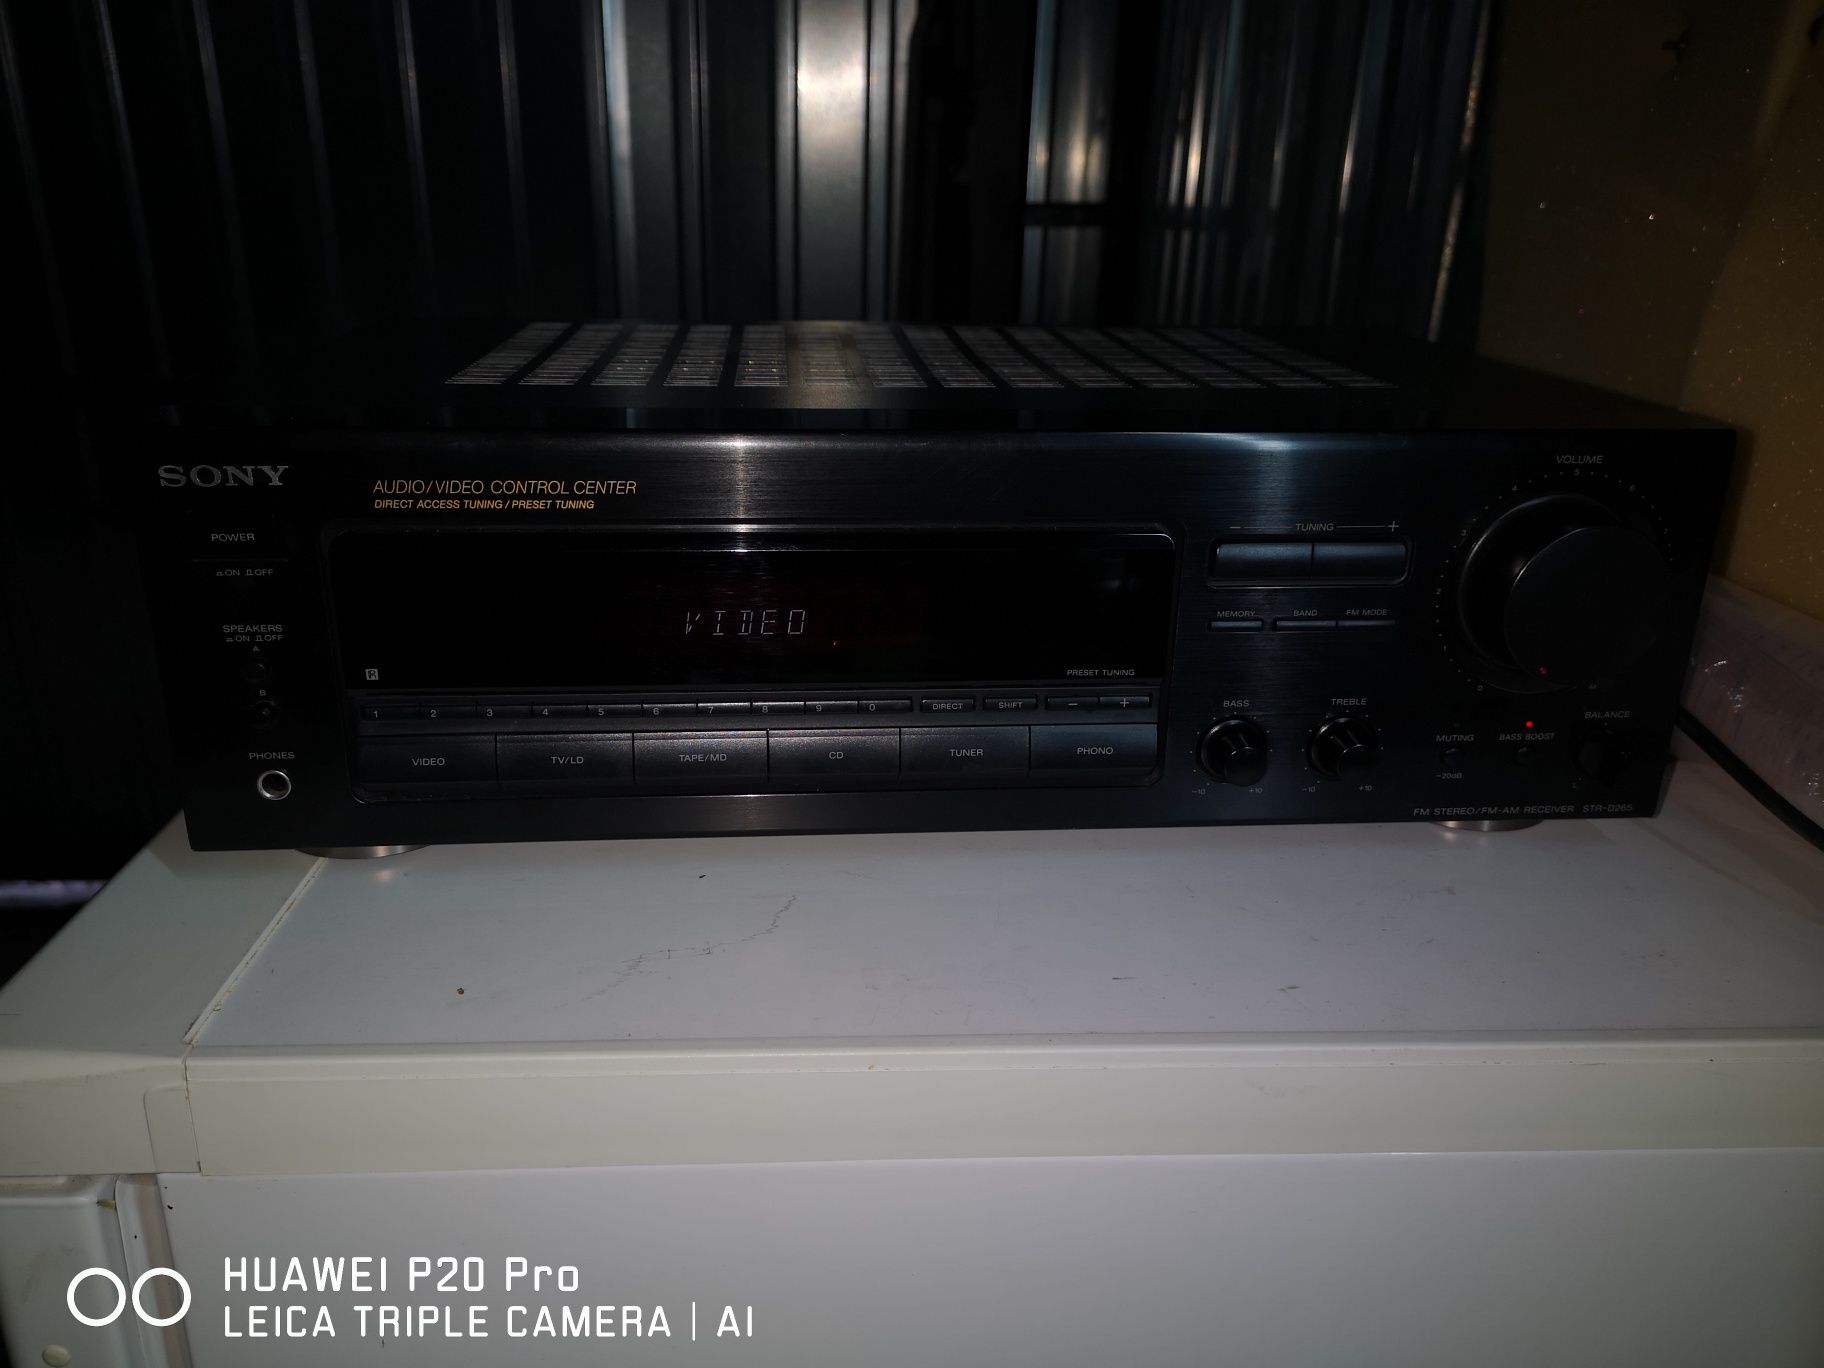 Sony STR D265 świetny amplituner stereo